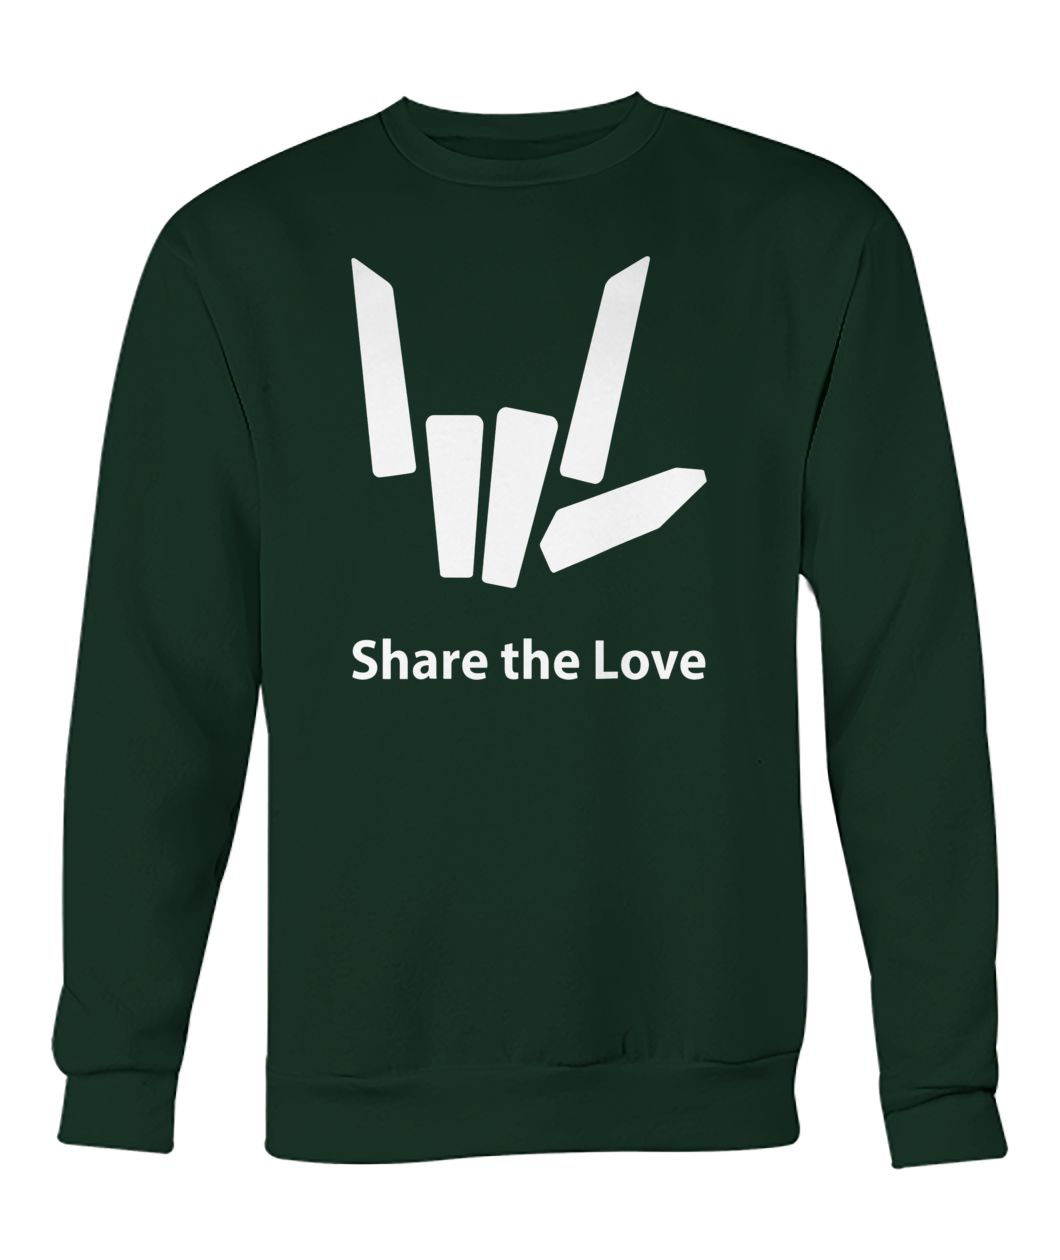 Share the love crew neck sweatshirt